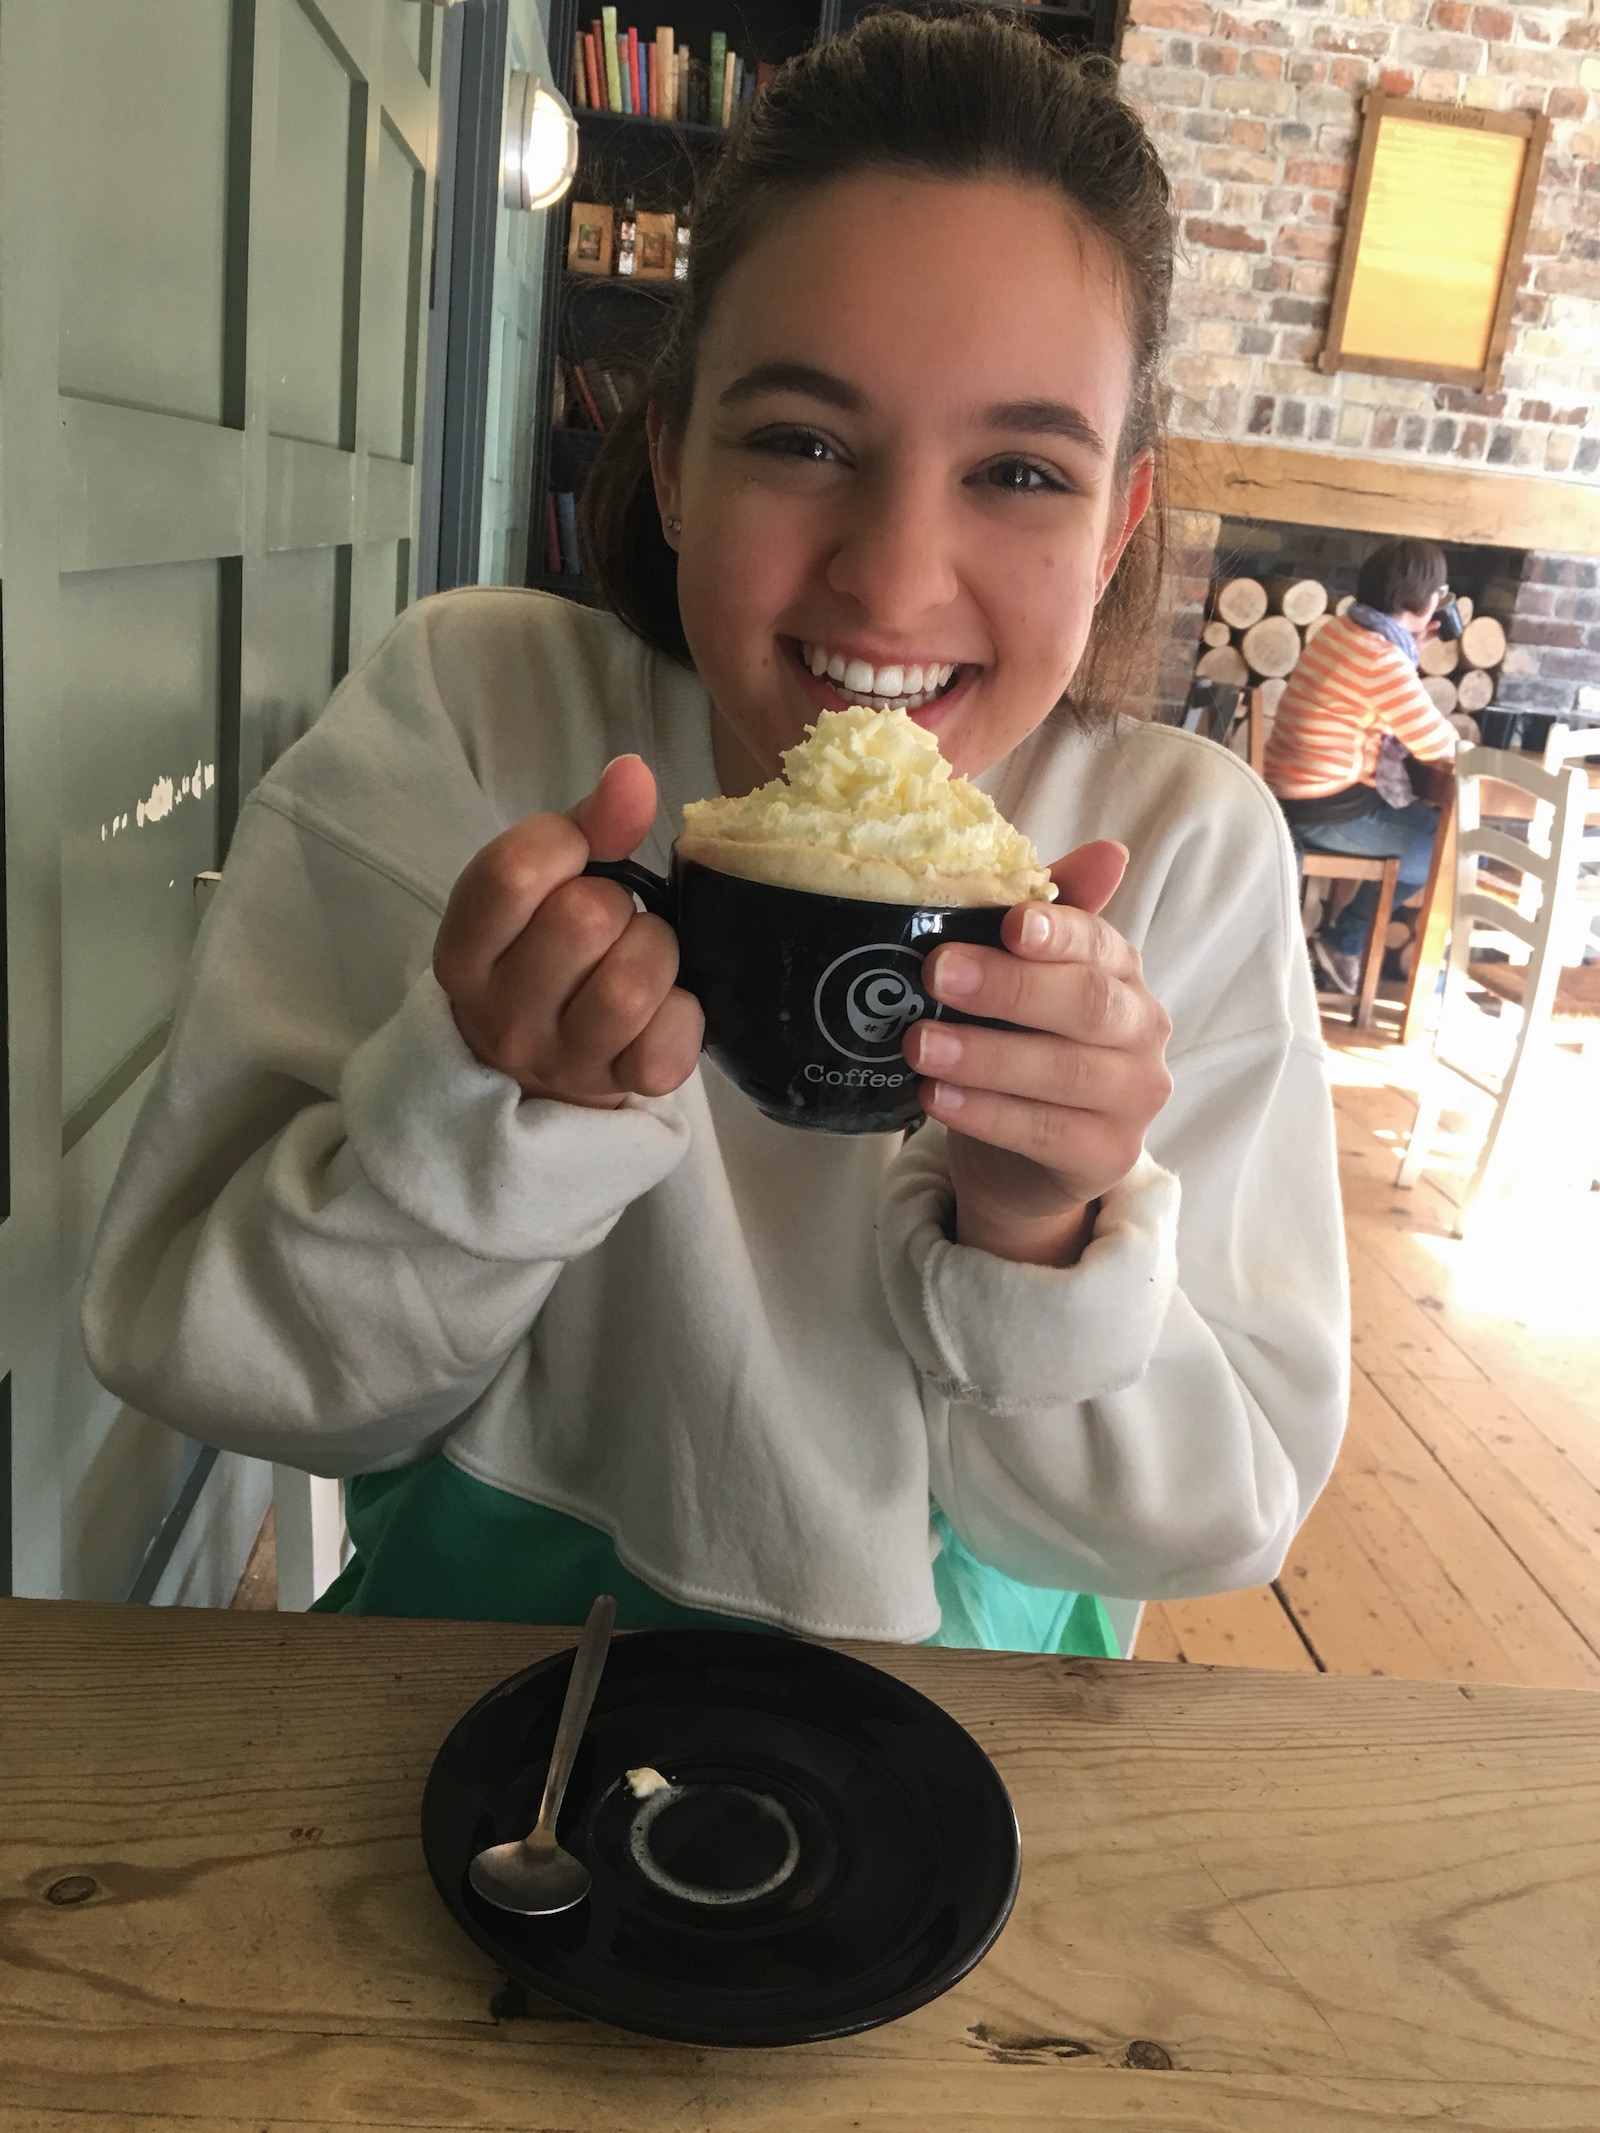 Tynika Thornton doing some stress management activities enjoying a latte